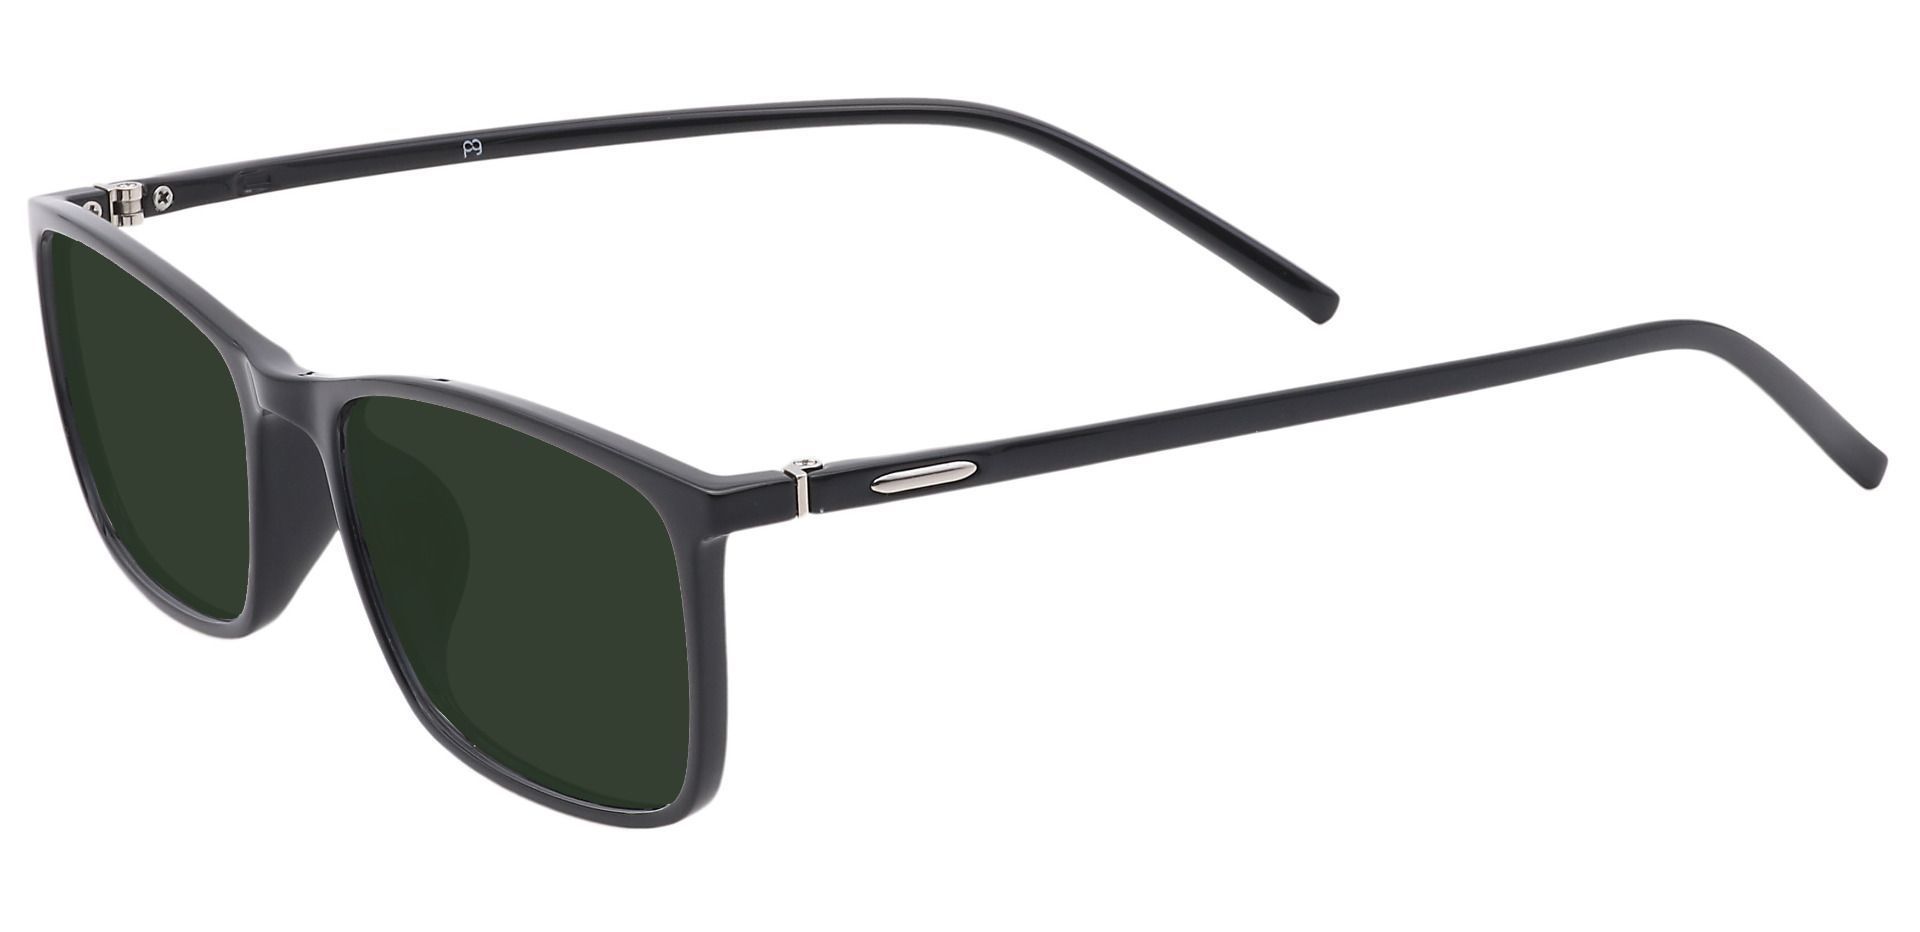 Fuji Rectangle Progressive Sunglasses - Black Frame With Green Lenses